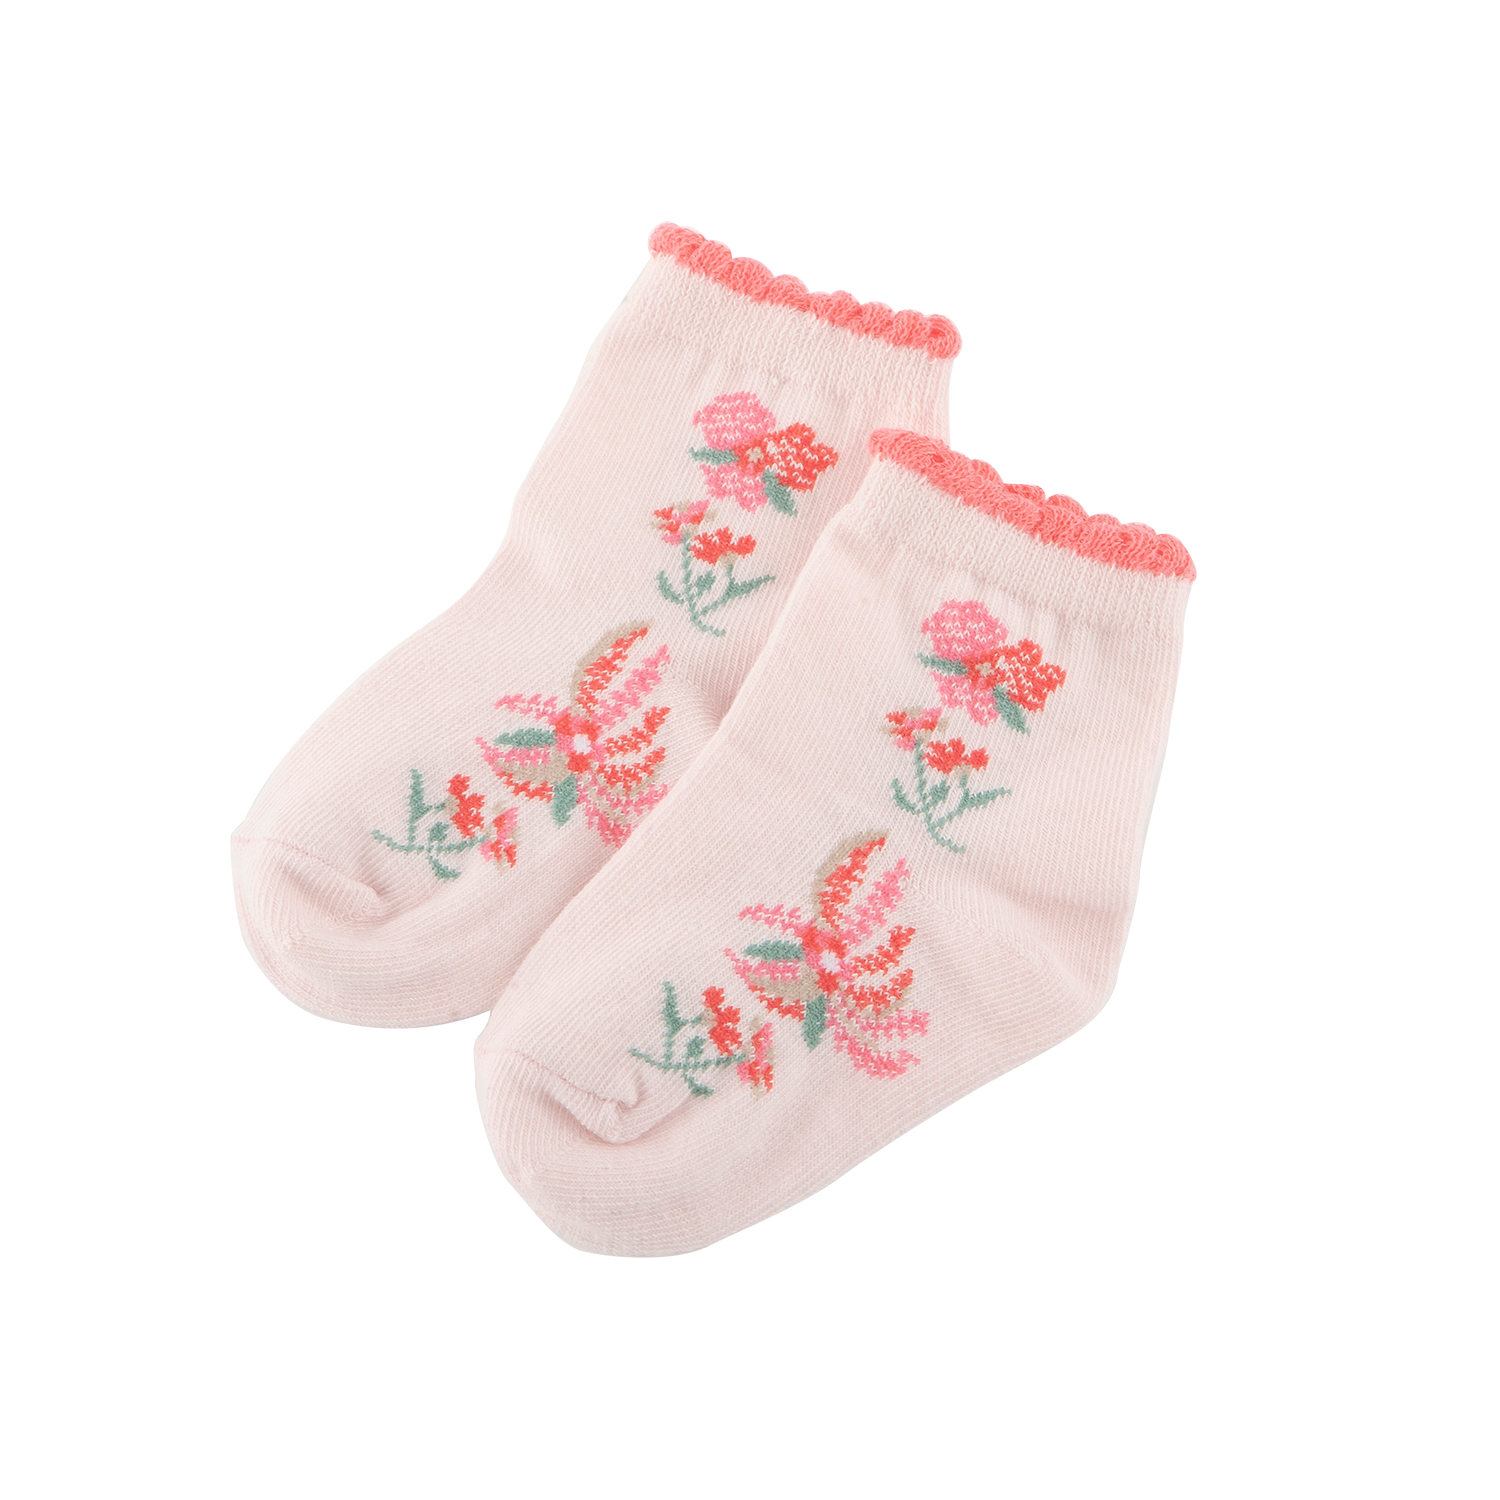 <tc>Pastel peach baby socks with flower prints</tc>